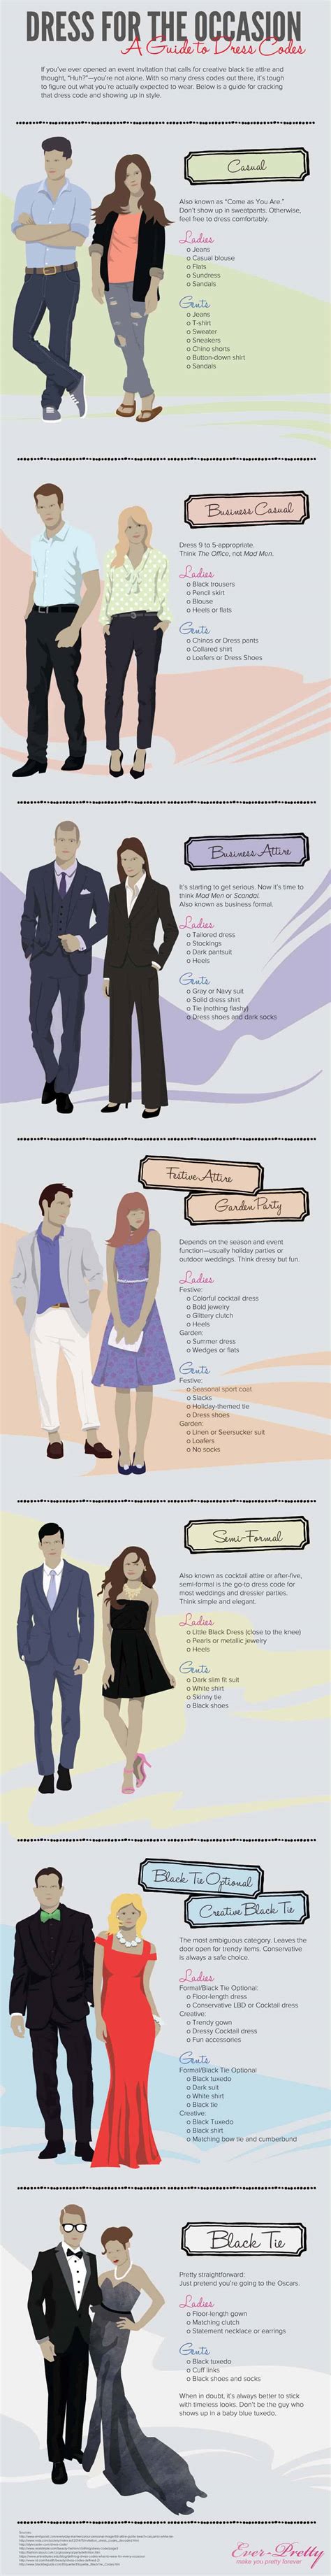 Dress Code Guide